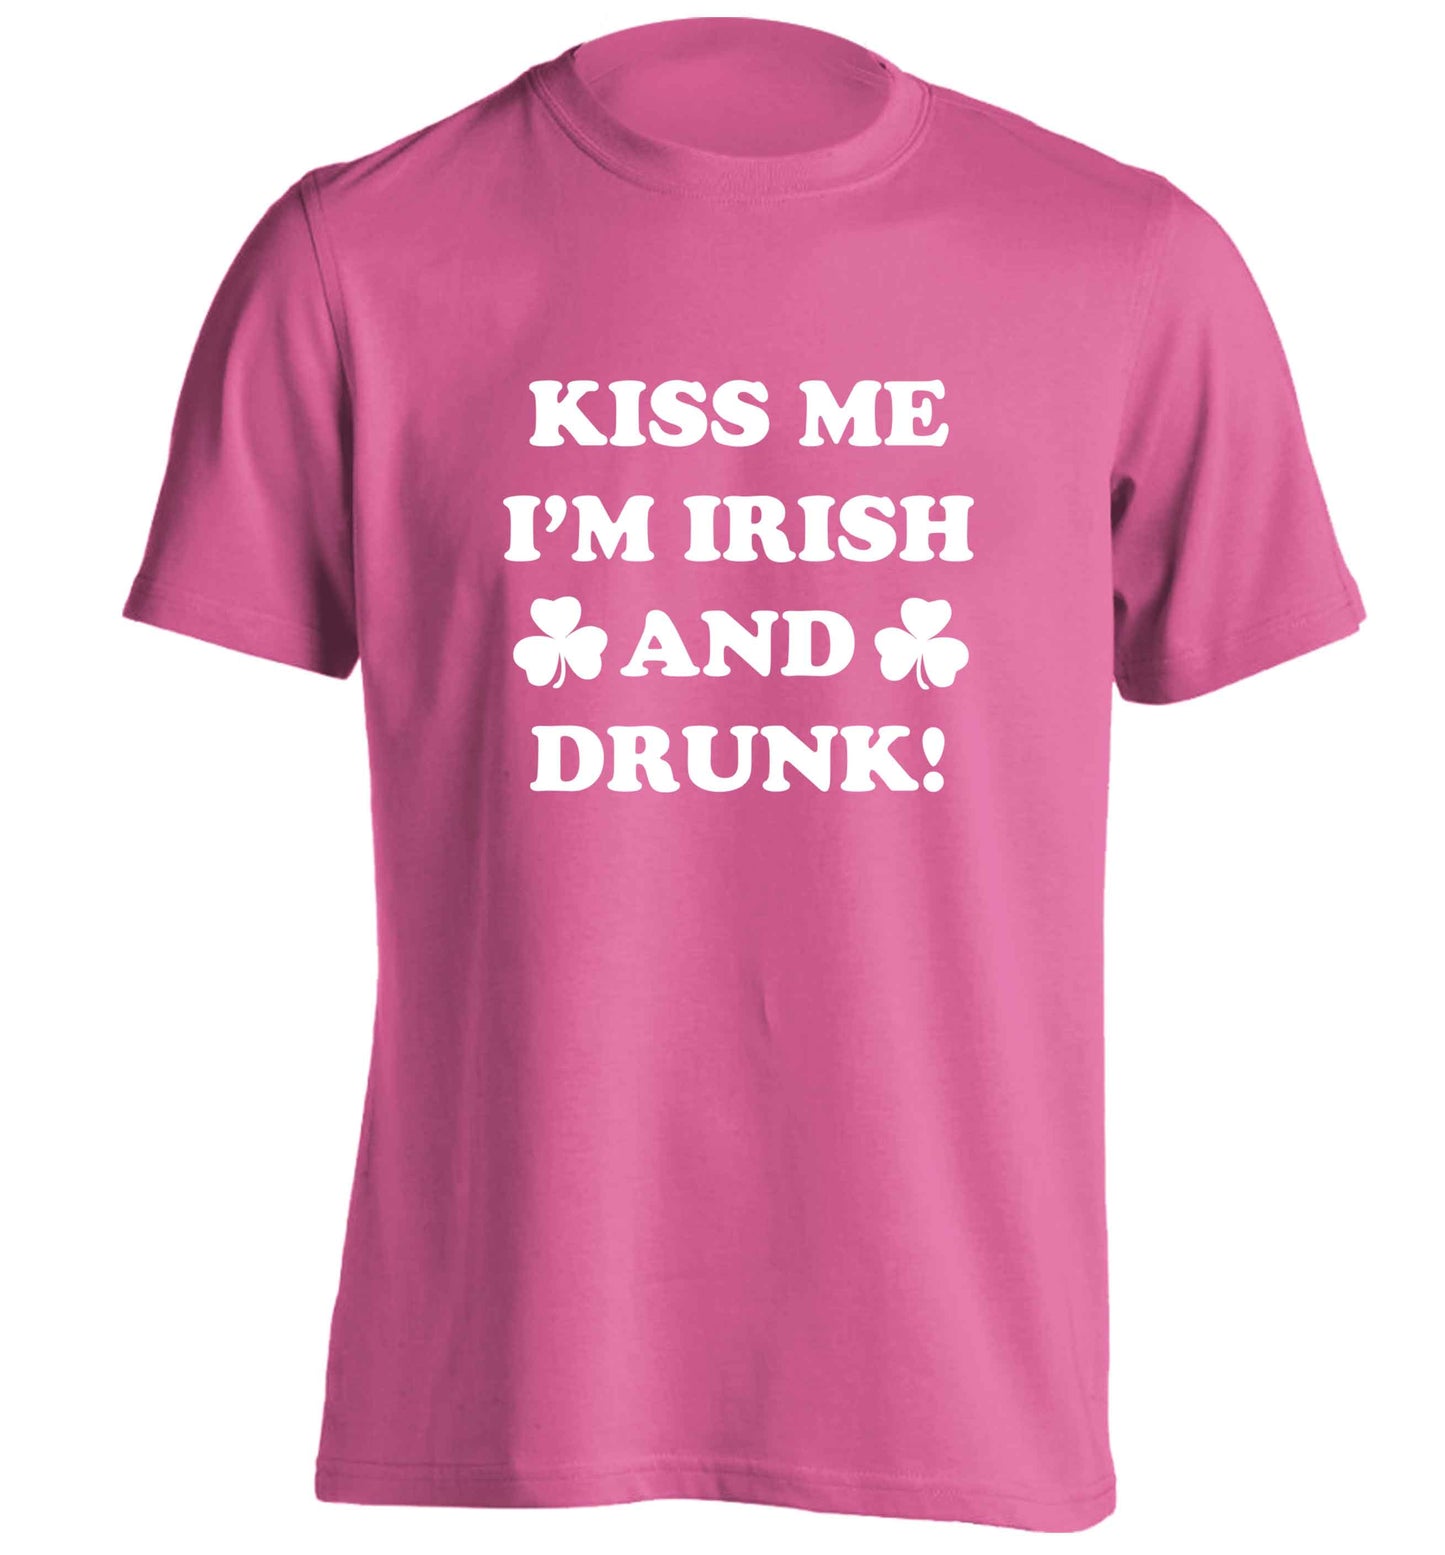 Kiss me I'm Irish and drunk adults unisex pink Tshirt 2XL